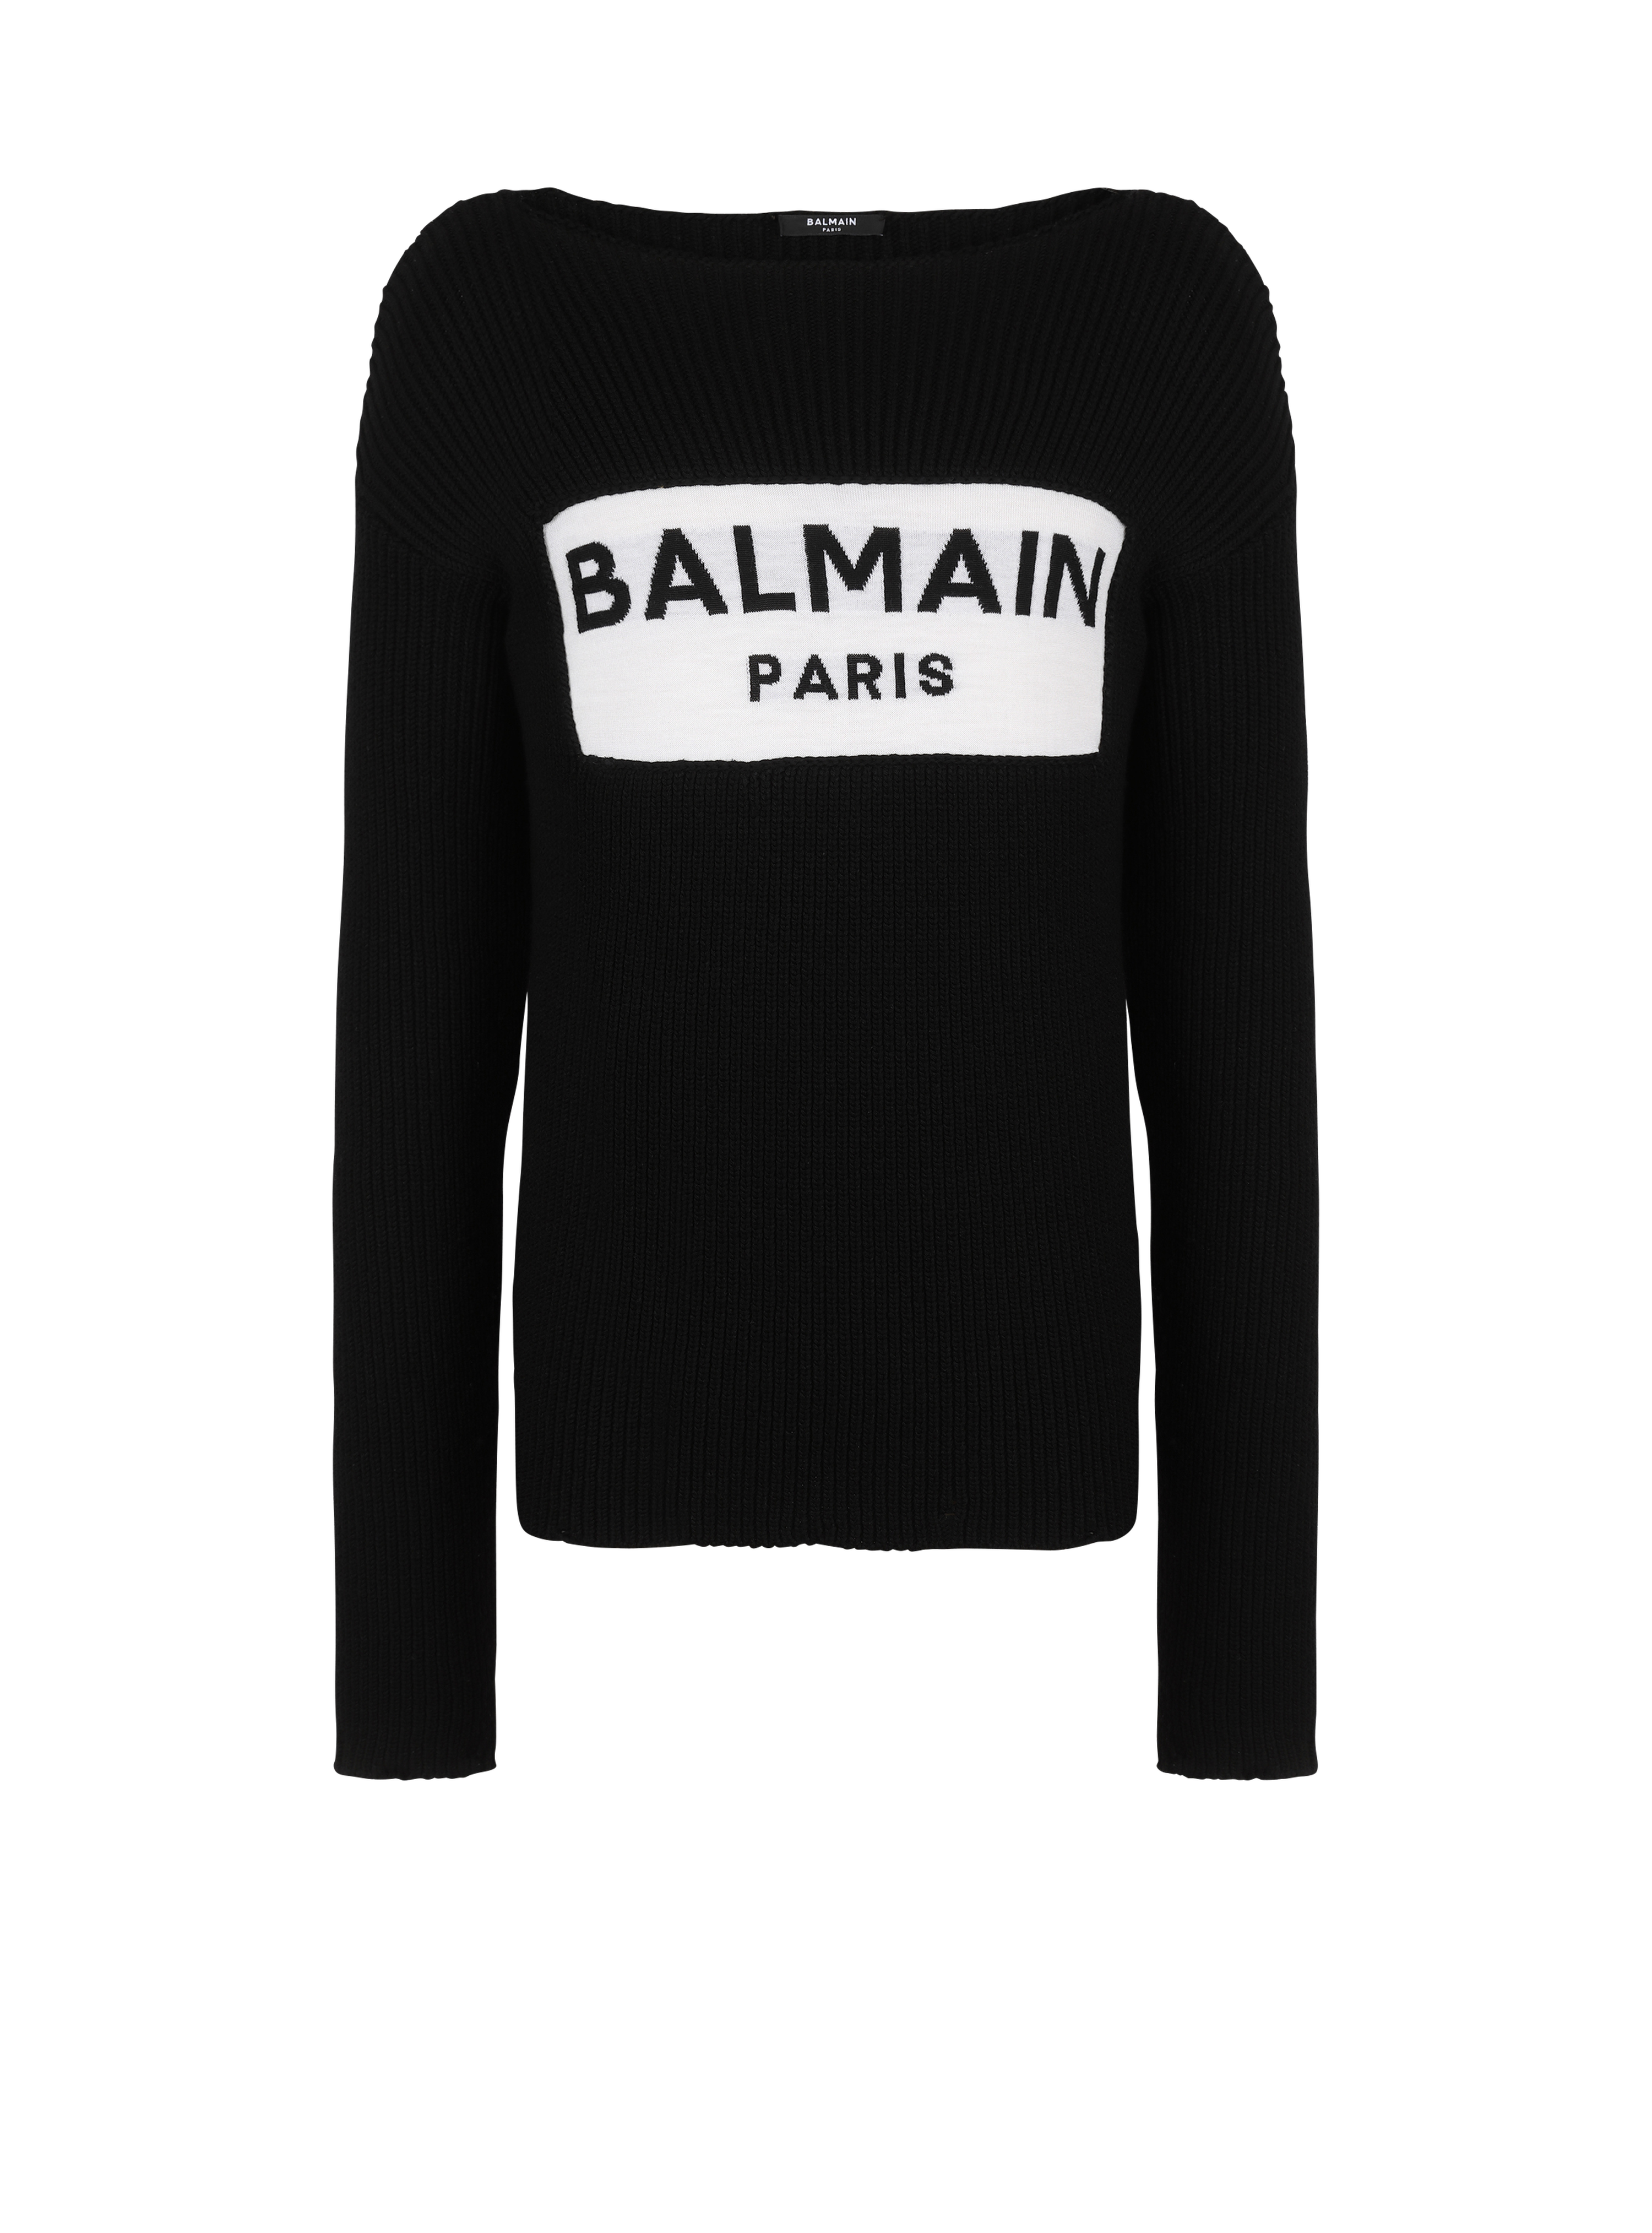 Maglia in lana con logo Balmain Paris, nero